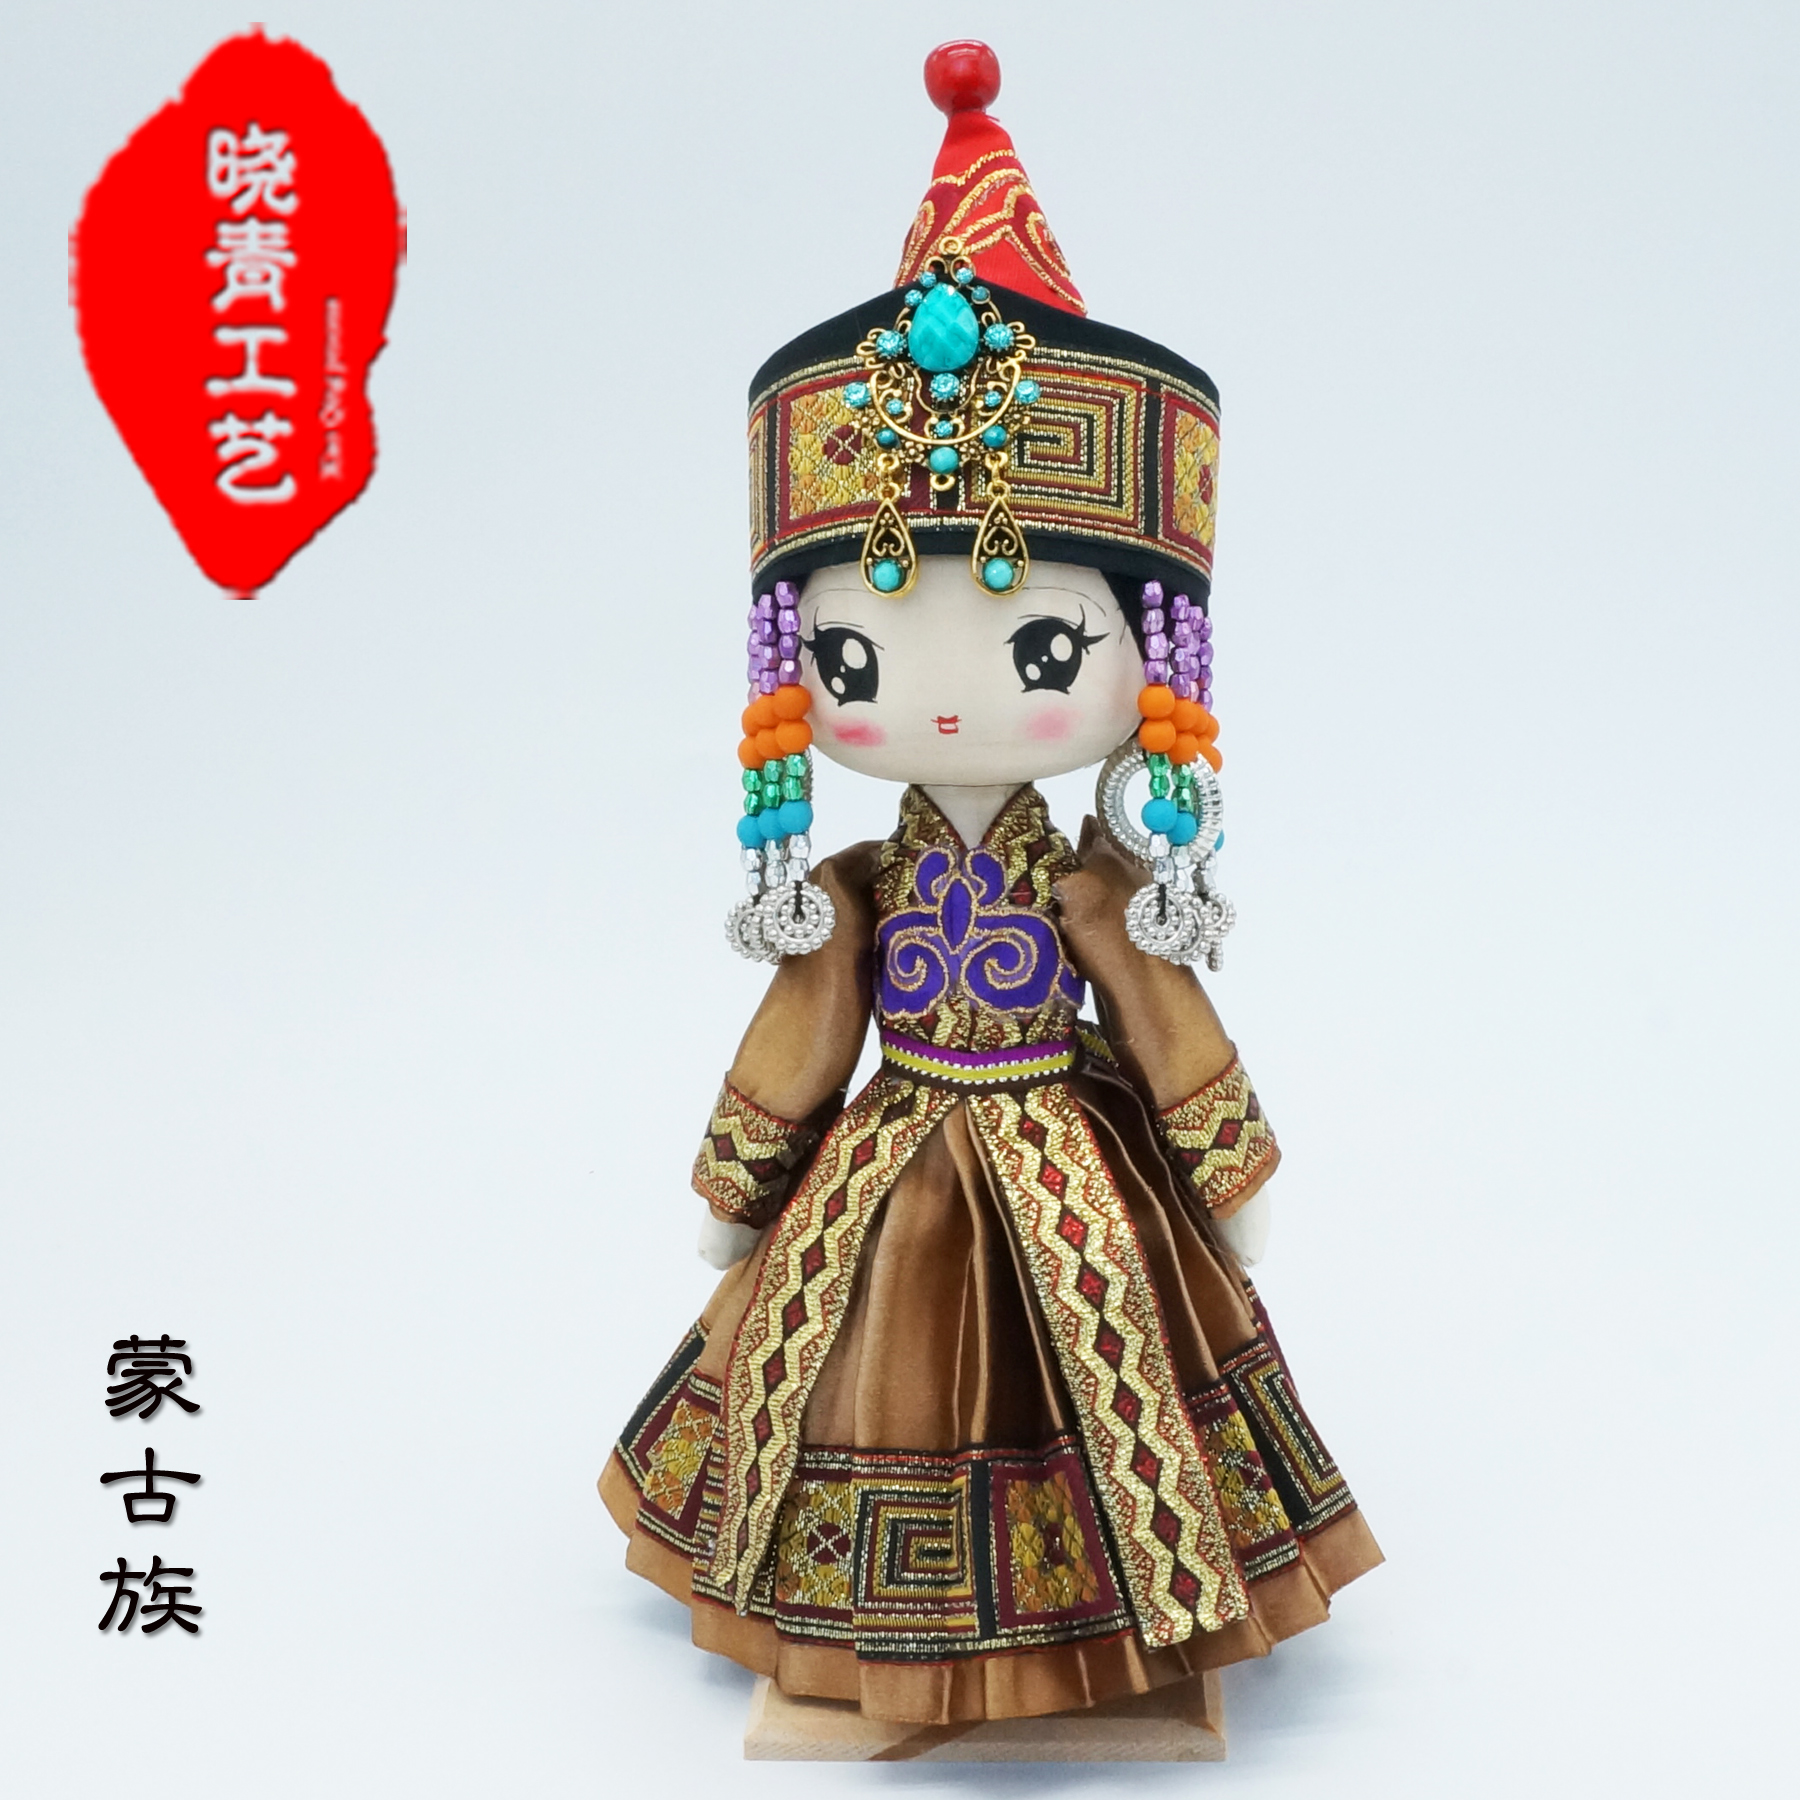 Xiaoqing Craft 28 センチメートル中国のエスニッククラフト人形モンゴル人形少数民族人形特別なギフト